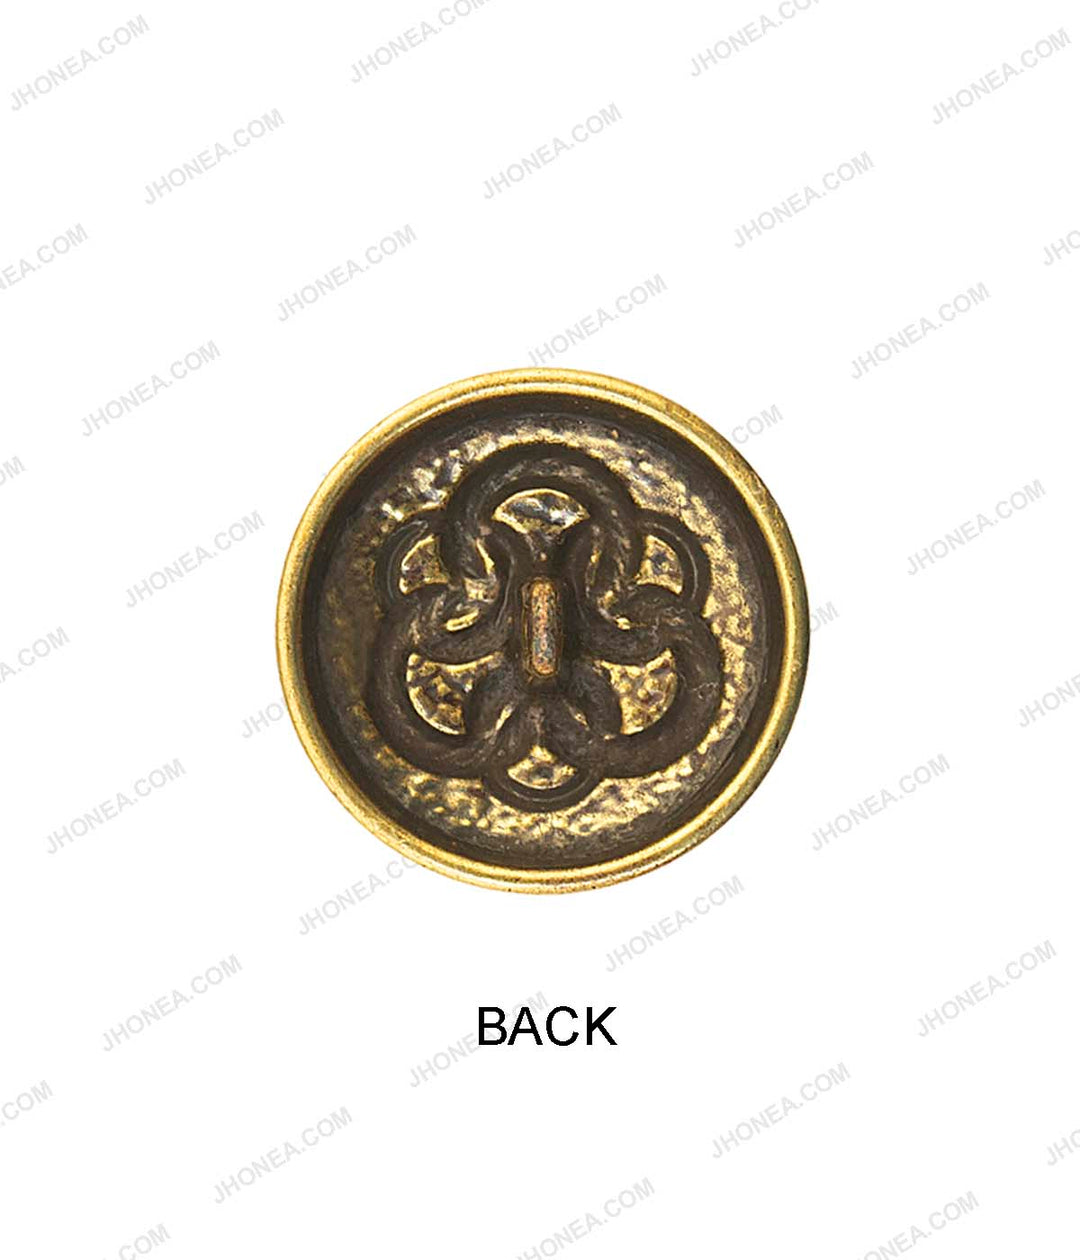 Celtic Design Antique Metal Shank Button for Men's Clothing